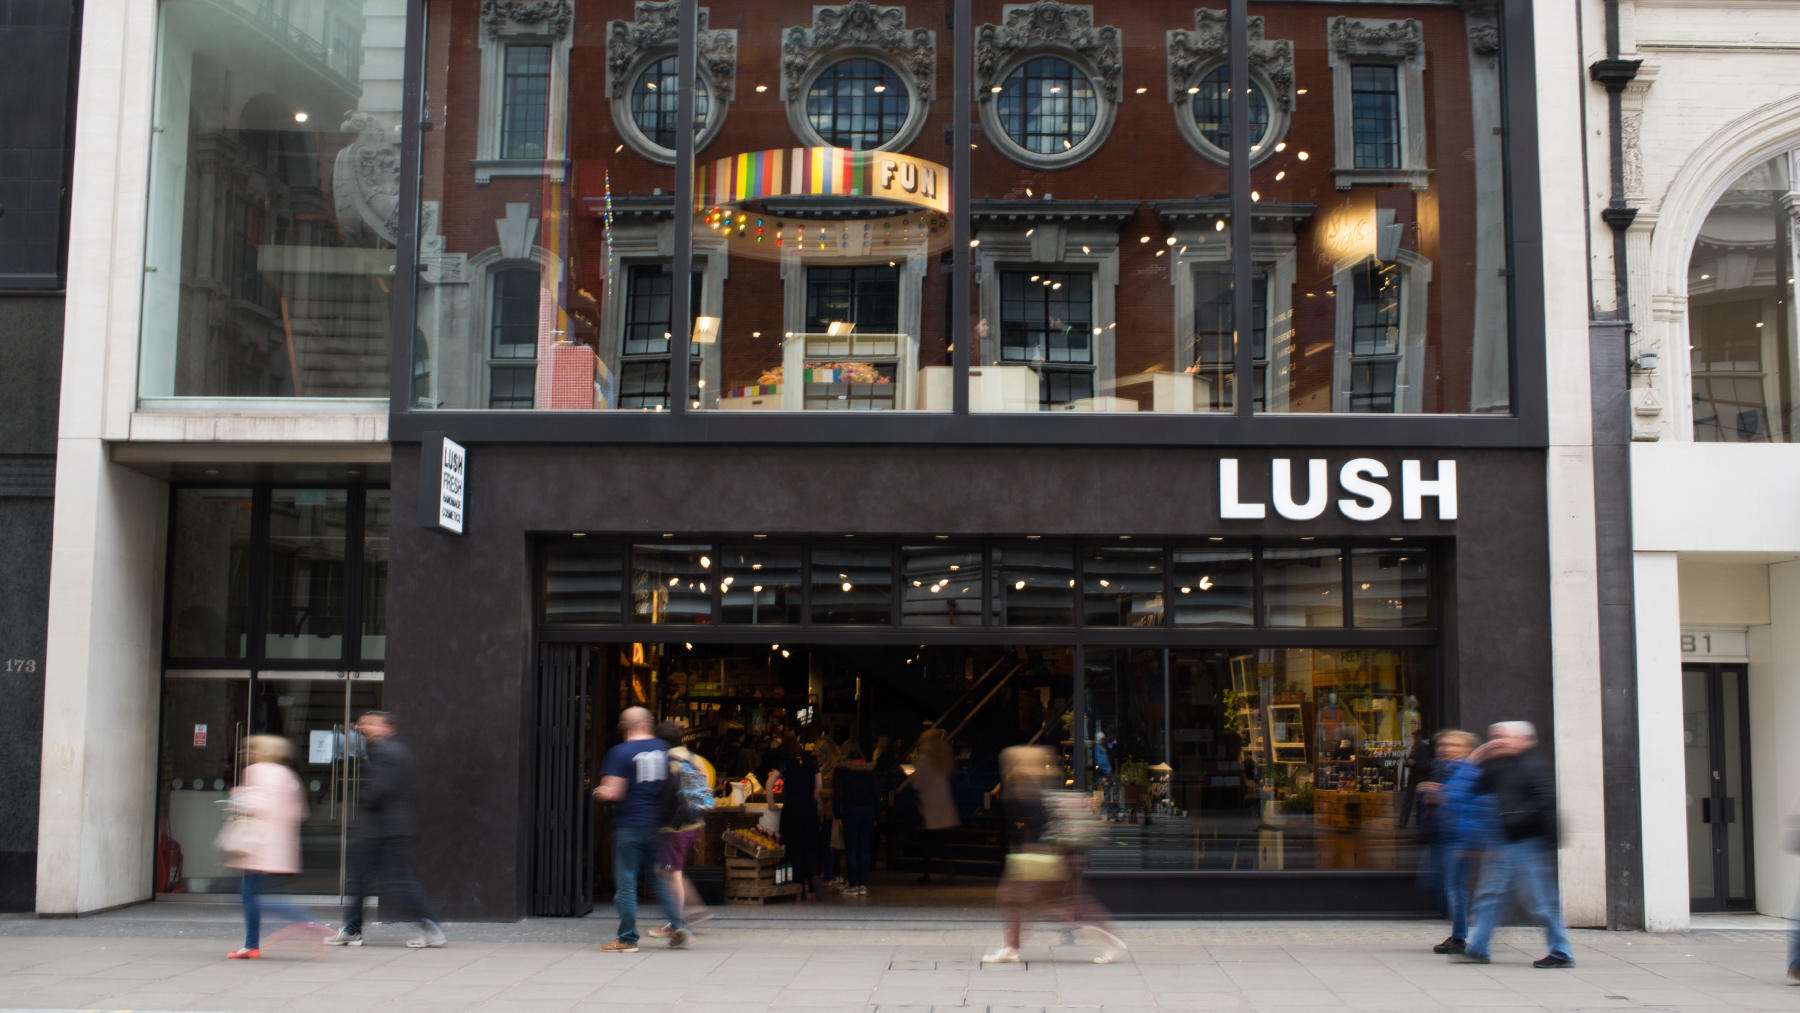 Lush Oxford Street shop front